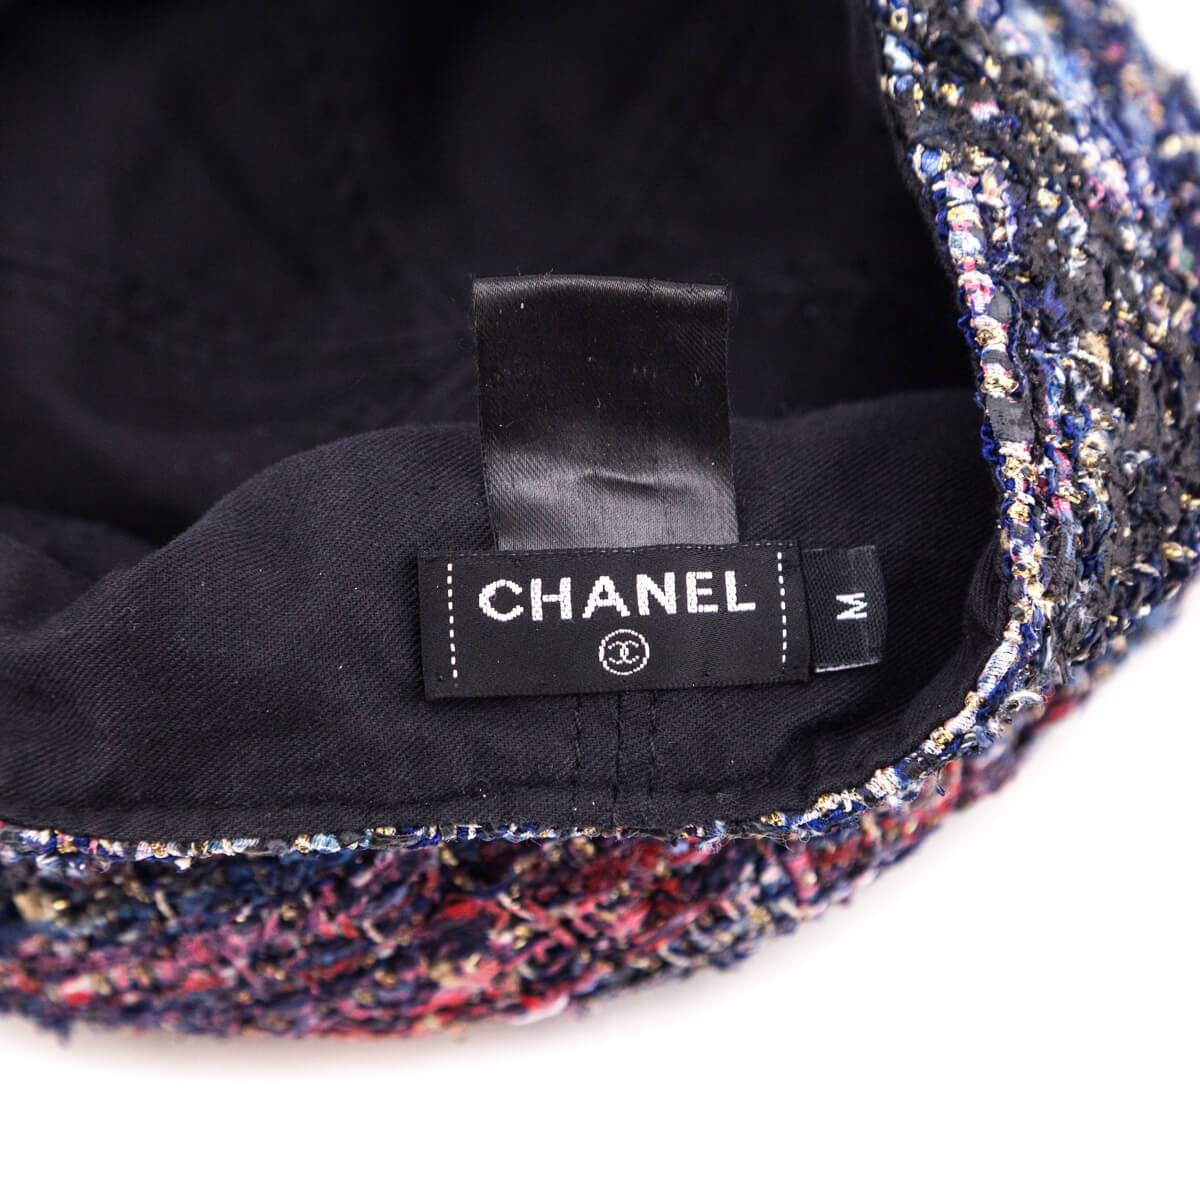 Chanel Multicolored Tweed Newsboy Cap Size Medium - Love that Bag etc - Preowned Authentic Designer Handbags & Preloved Fashions